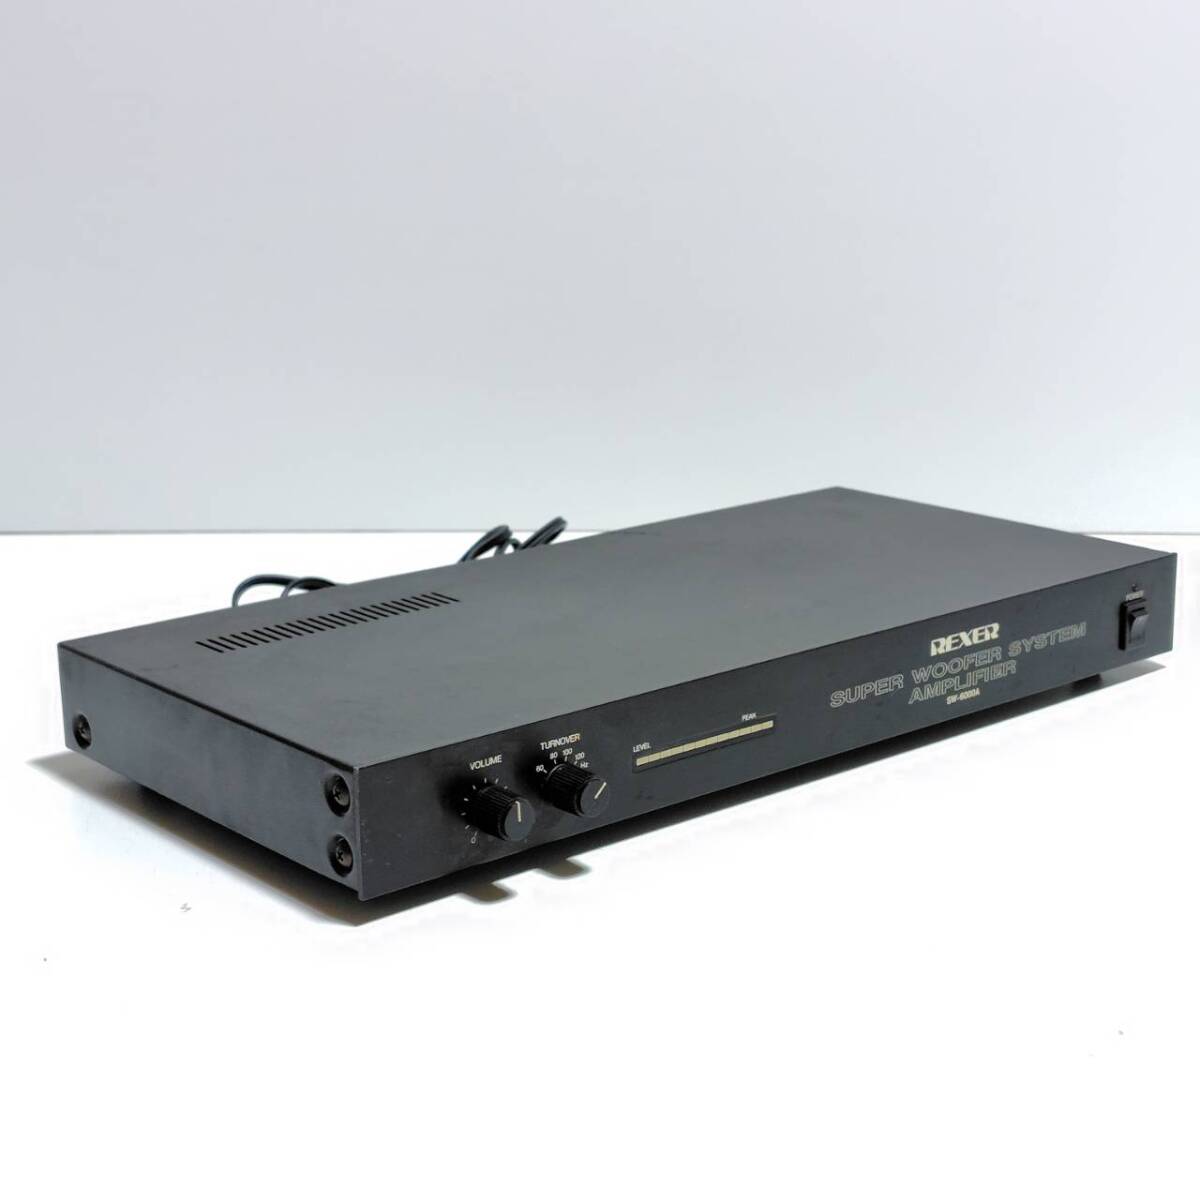 REXER SW-6000A super woofer system amplifier 01 operation goods 